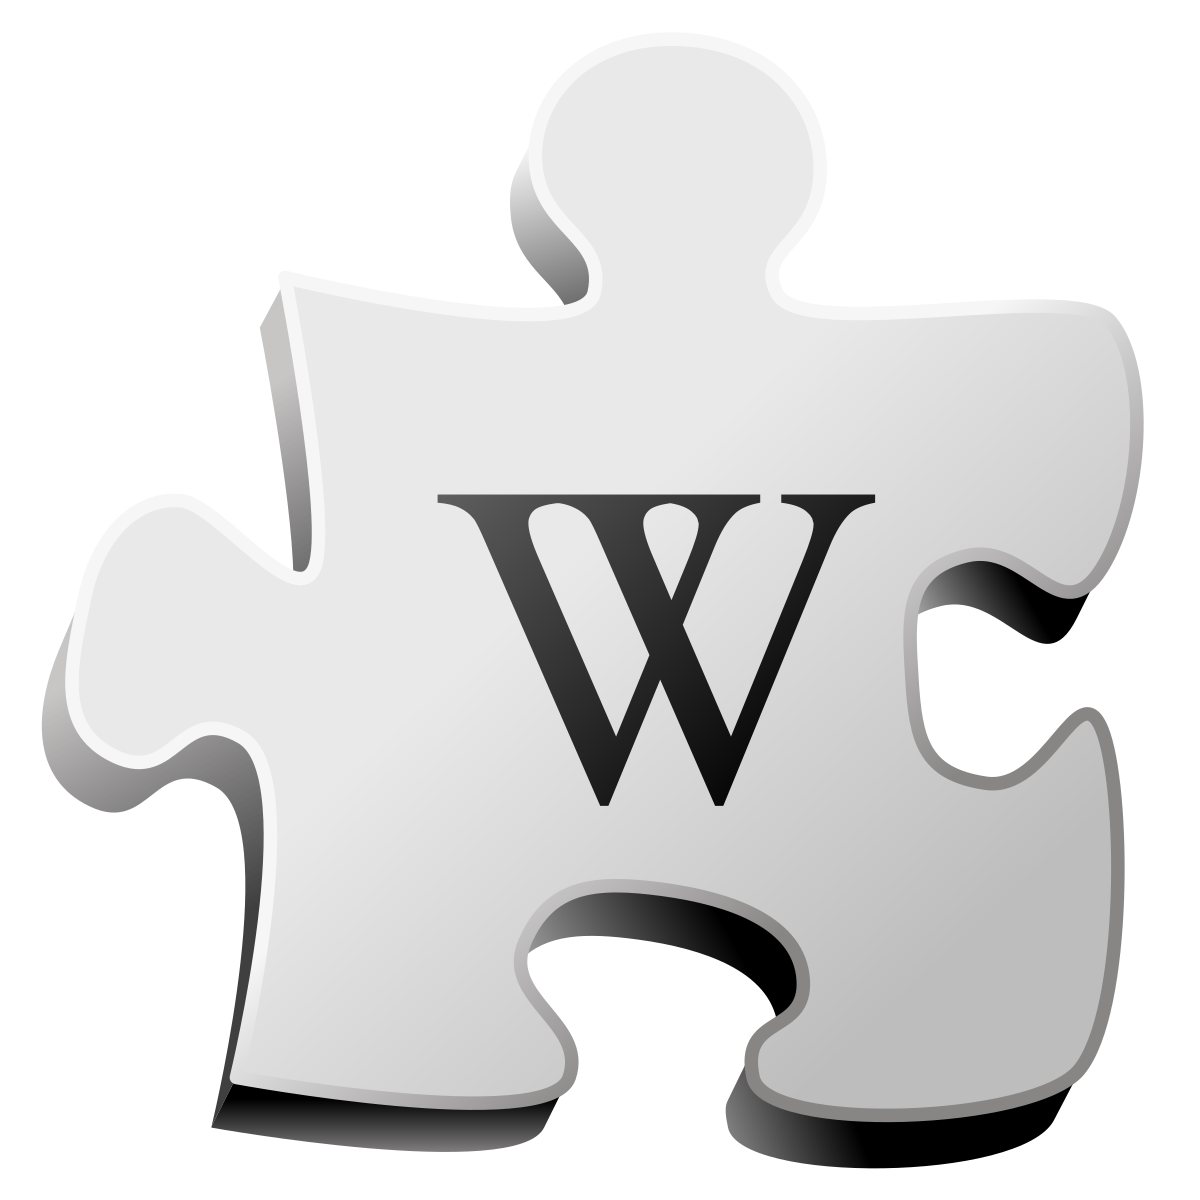 Https ru wikipedia org w. Иконка Wiki. Википедия логотип. Символ Википедии. Значок Википедии на прозрачном фоне.